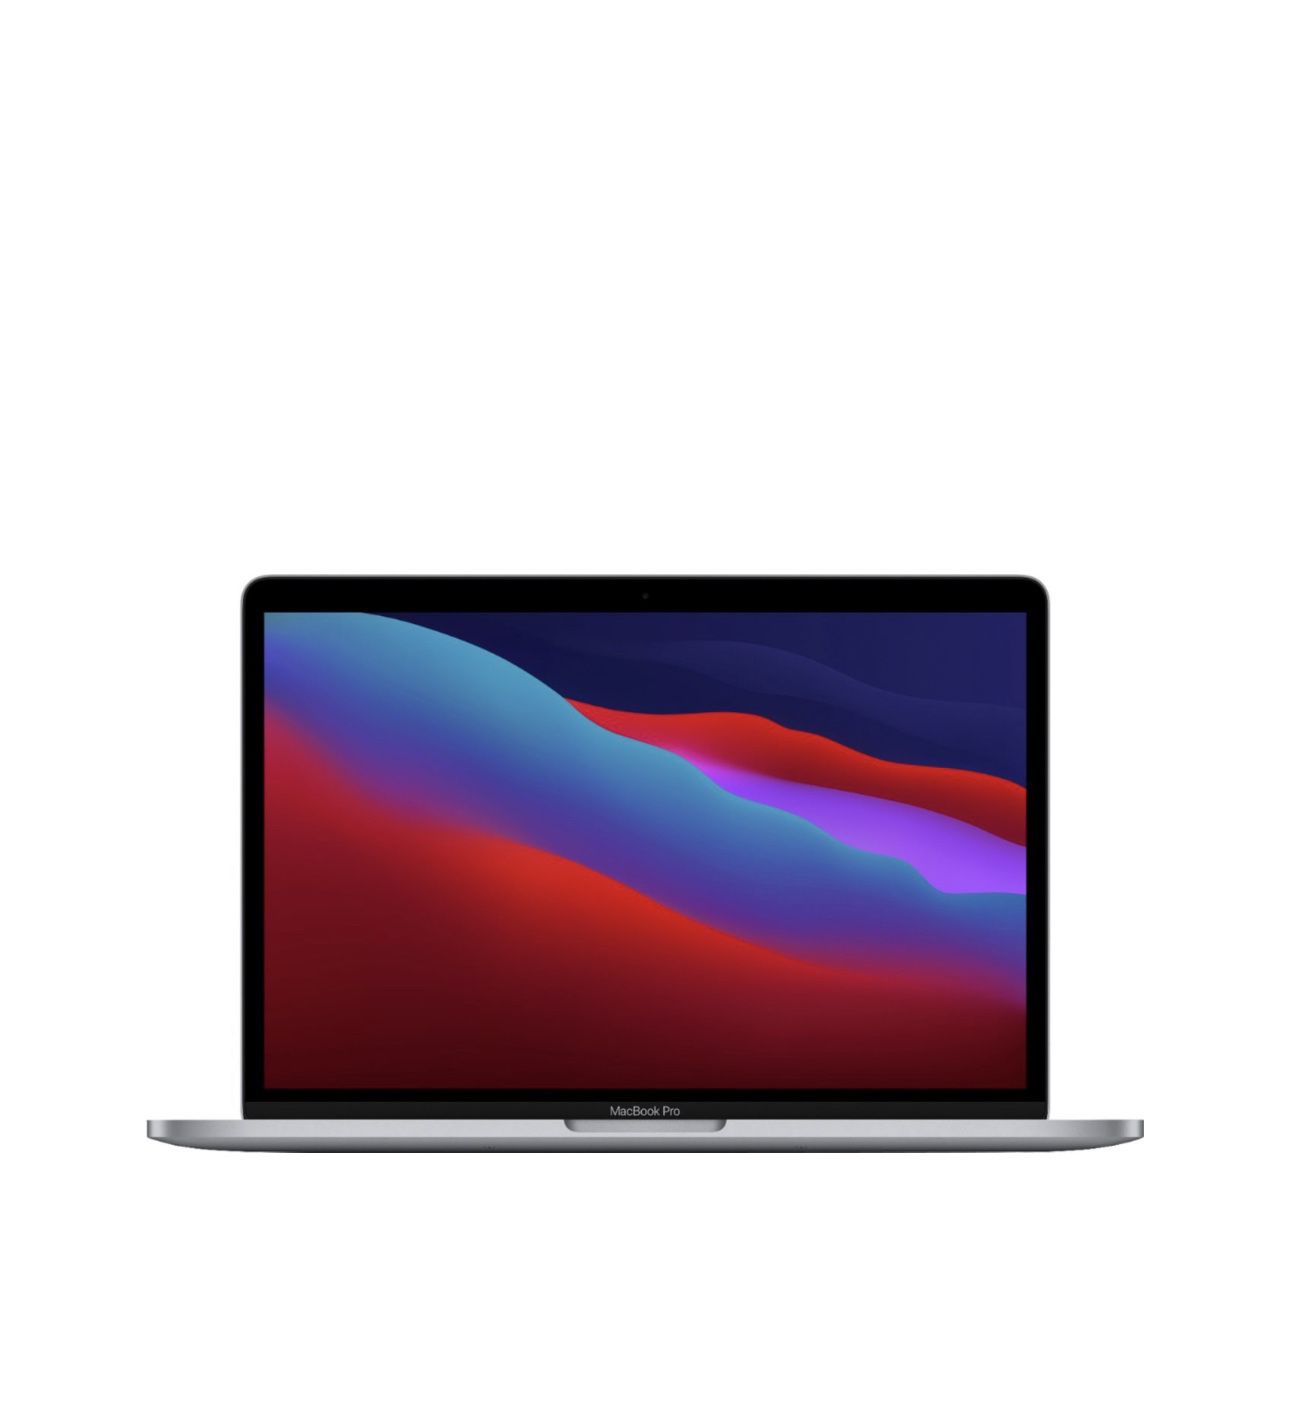 Apple MacBook Pro 13.3" Laptop - Apple M1 chip - 8GB Memory - 256GB SSD - Space Gray 